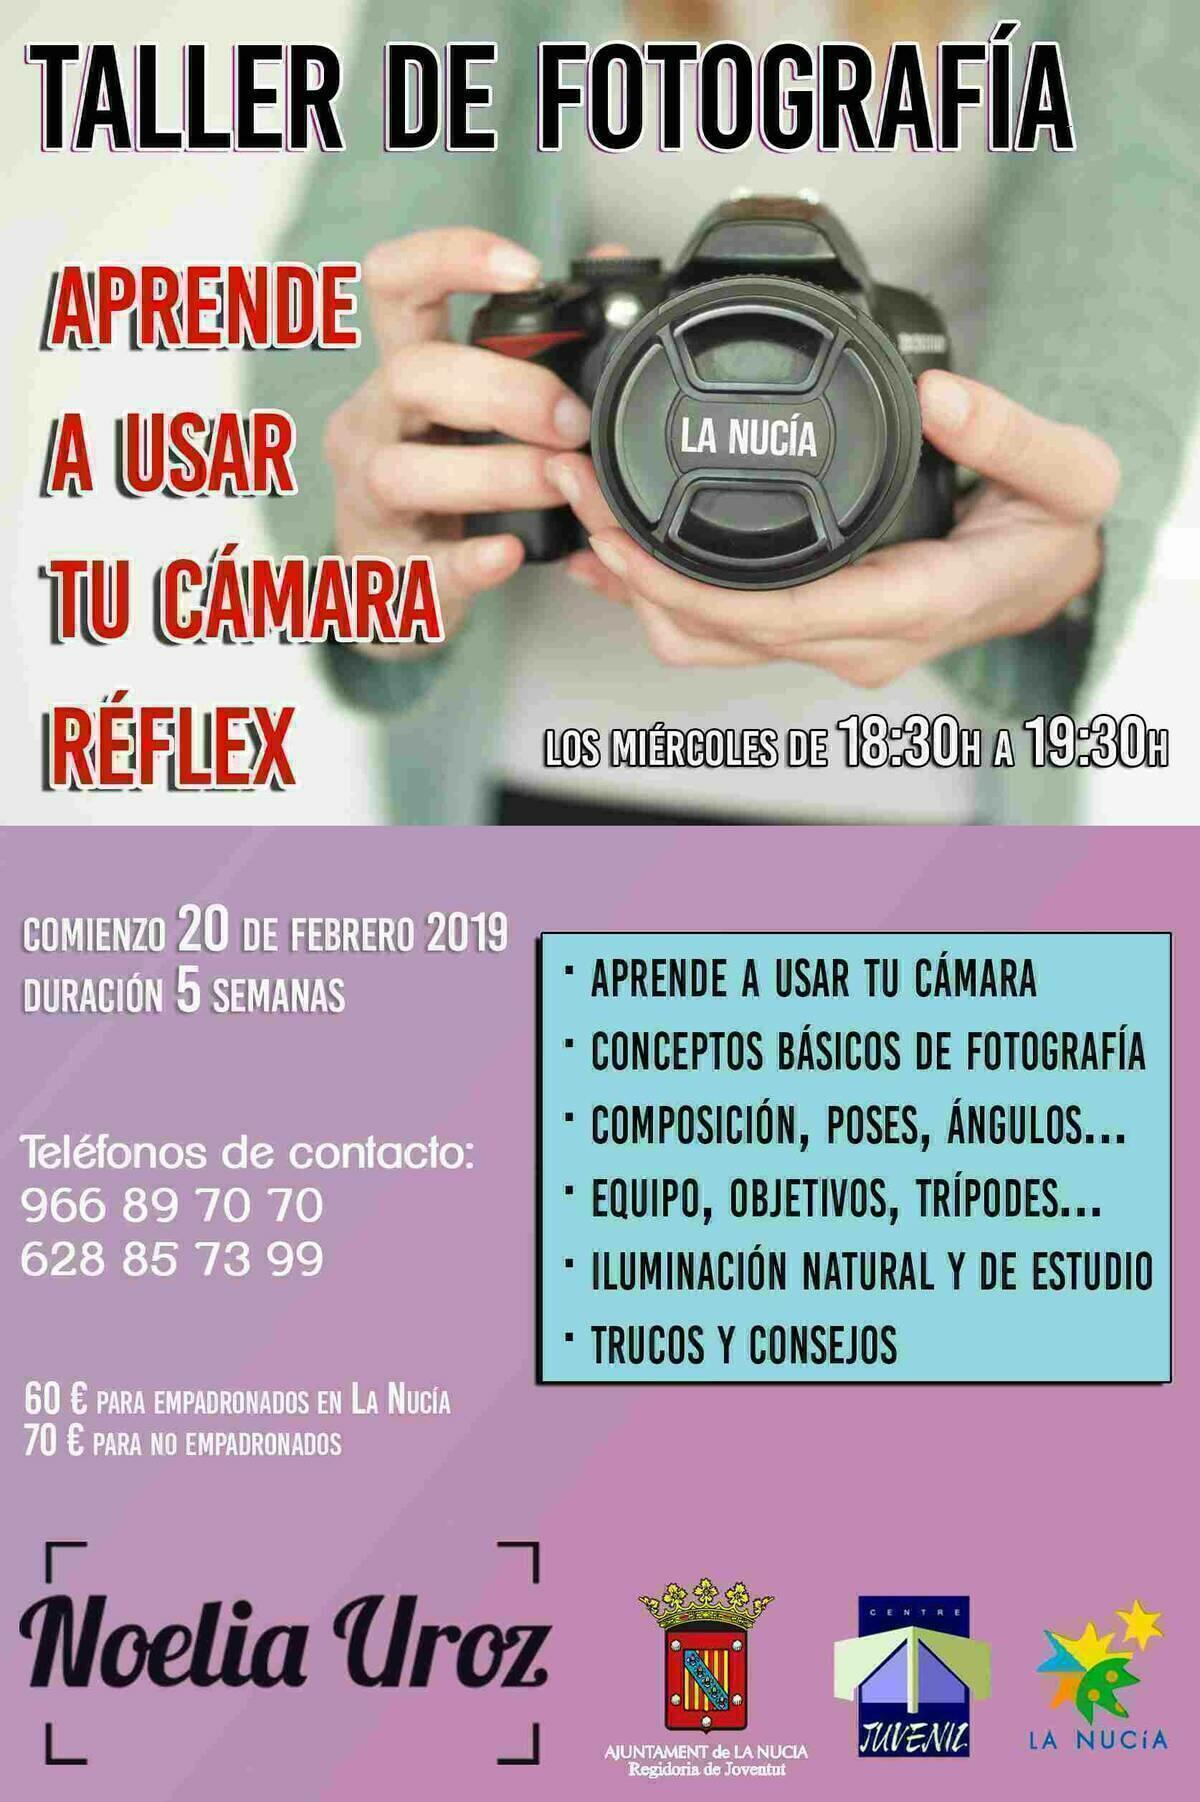 Taller de Fotografía “Aprende a usar tu cámara réflex” en La Nucía